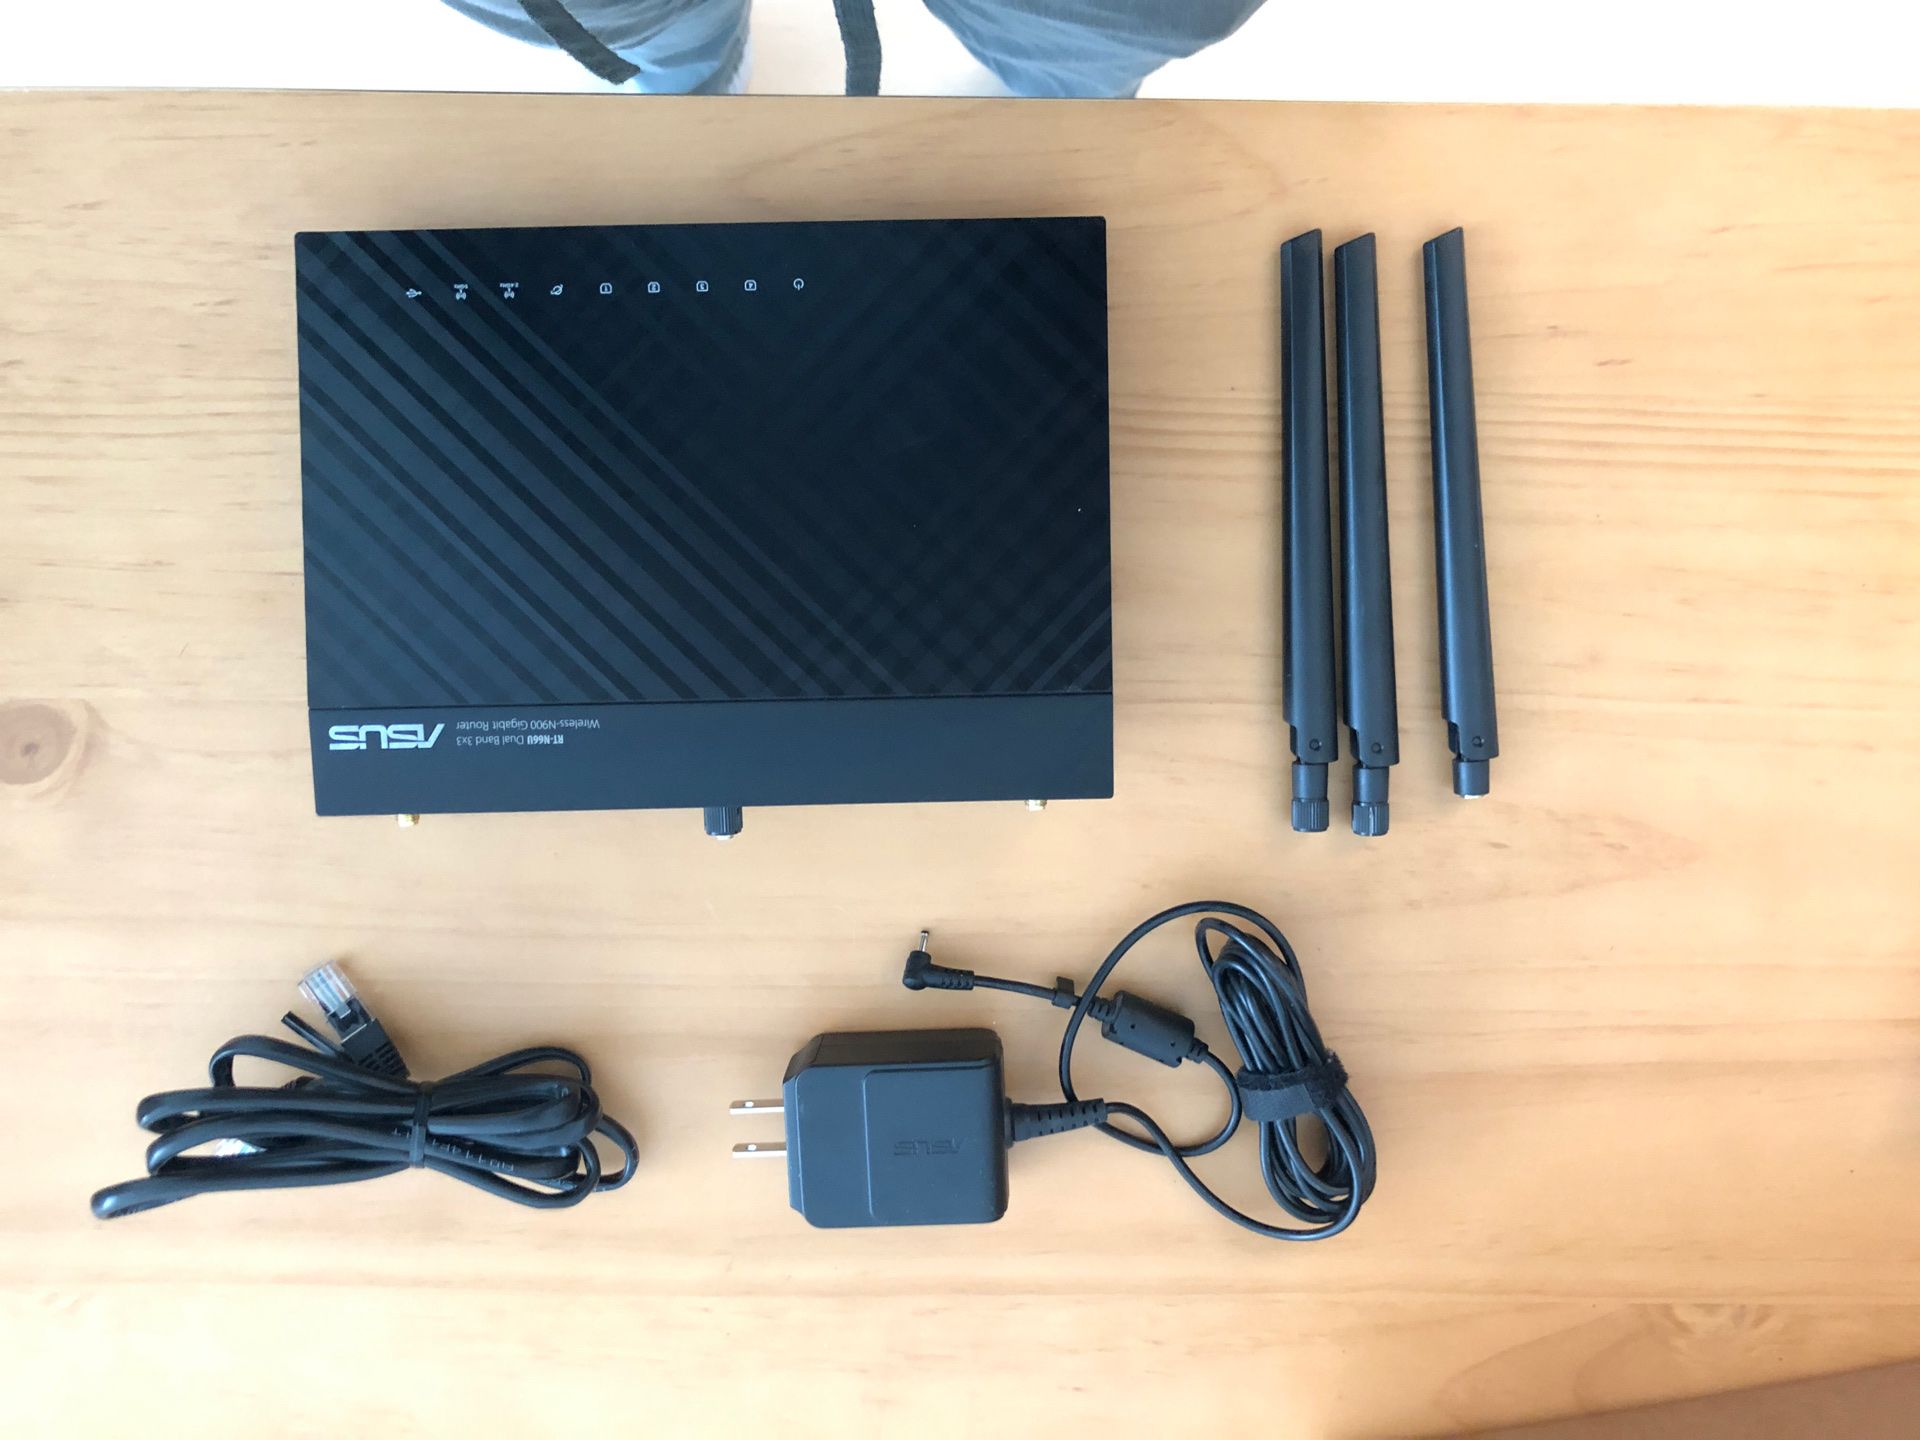 Asus wireless-n900 gigabit router